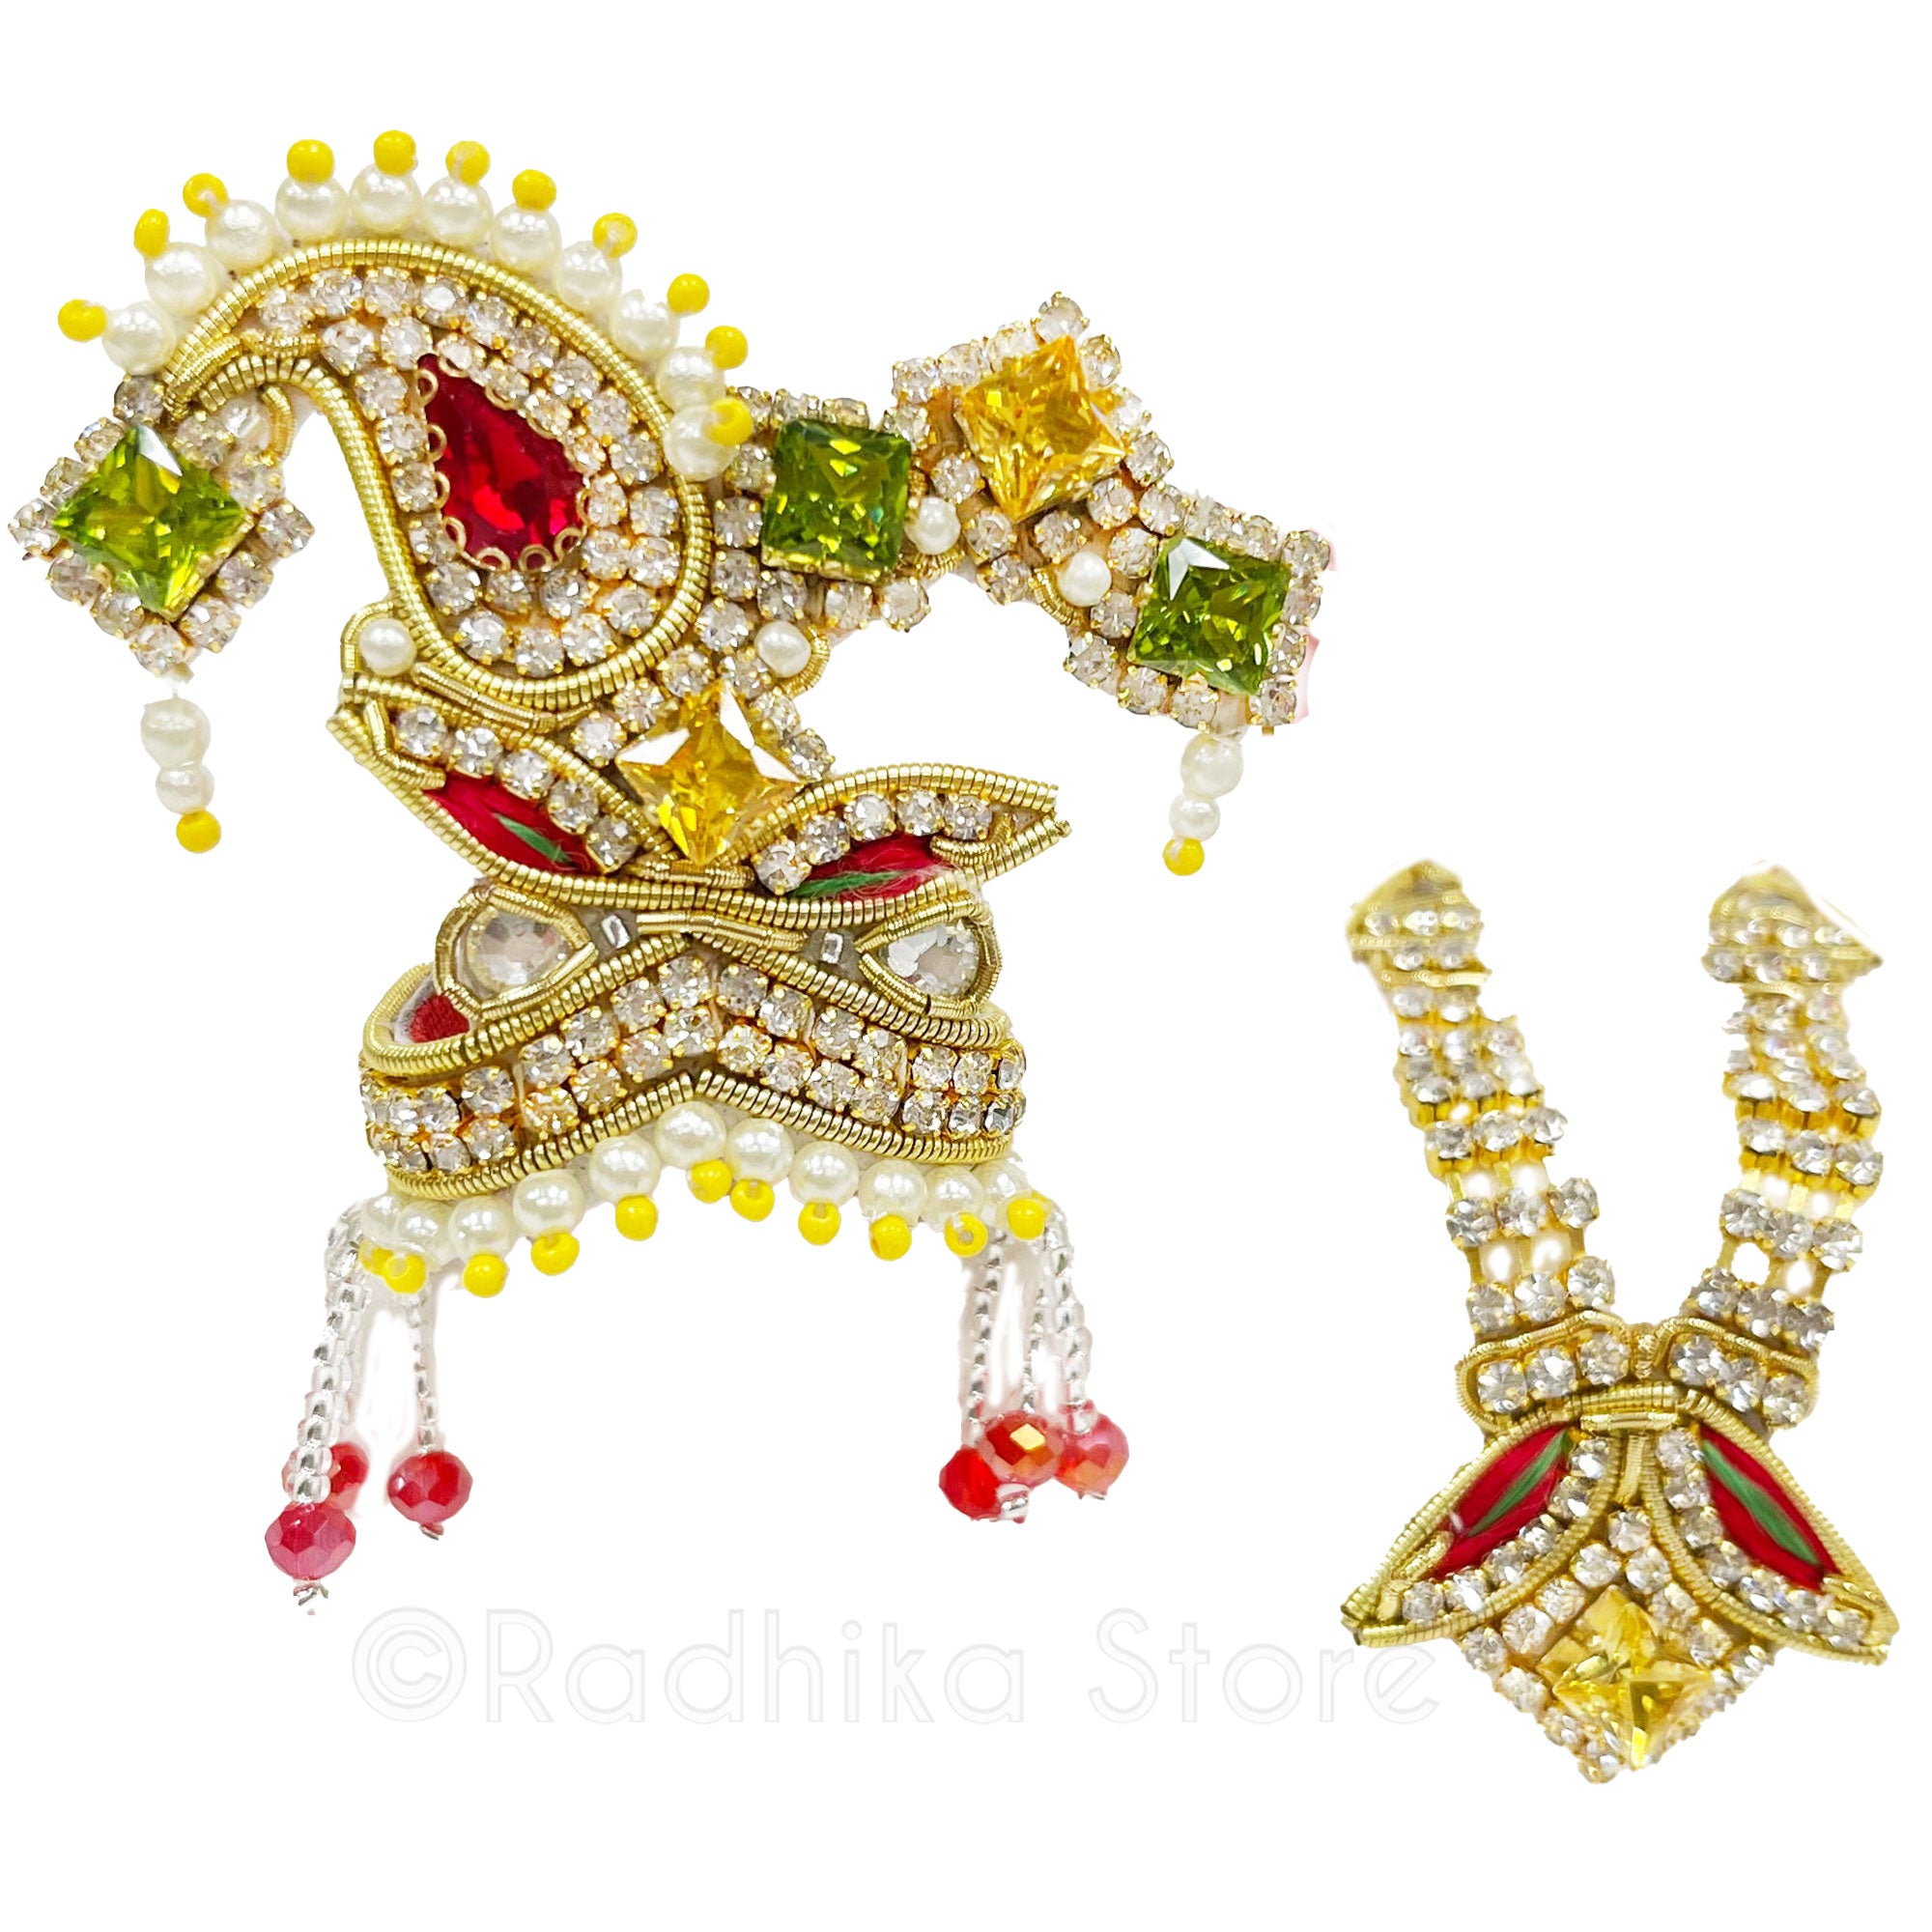 Chintamani Chandrika - Deity Crown and Necklace Set